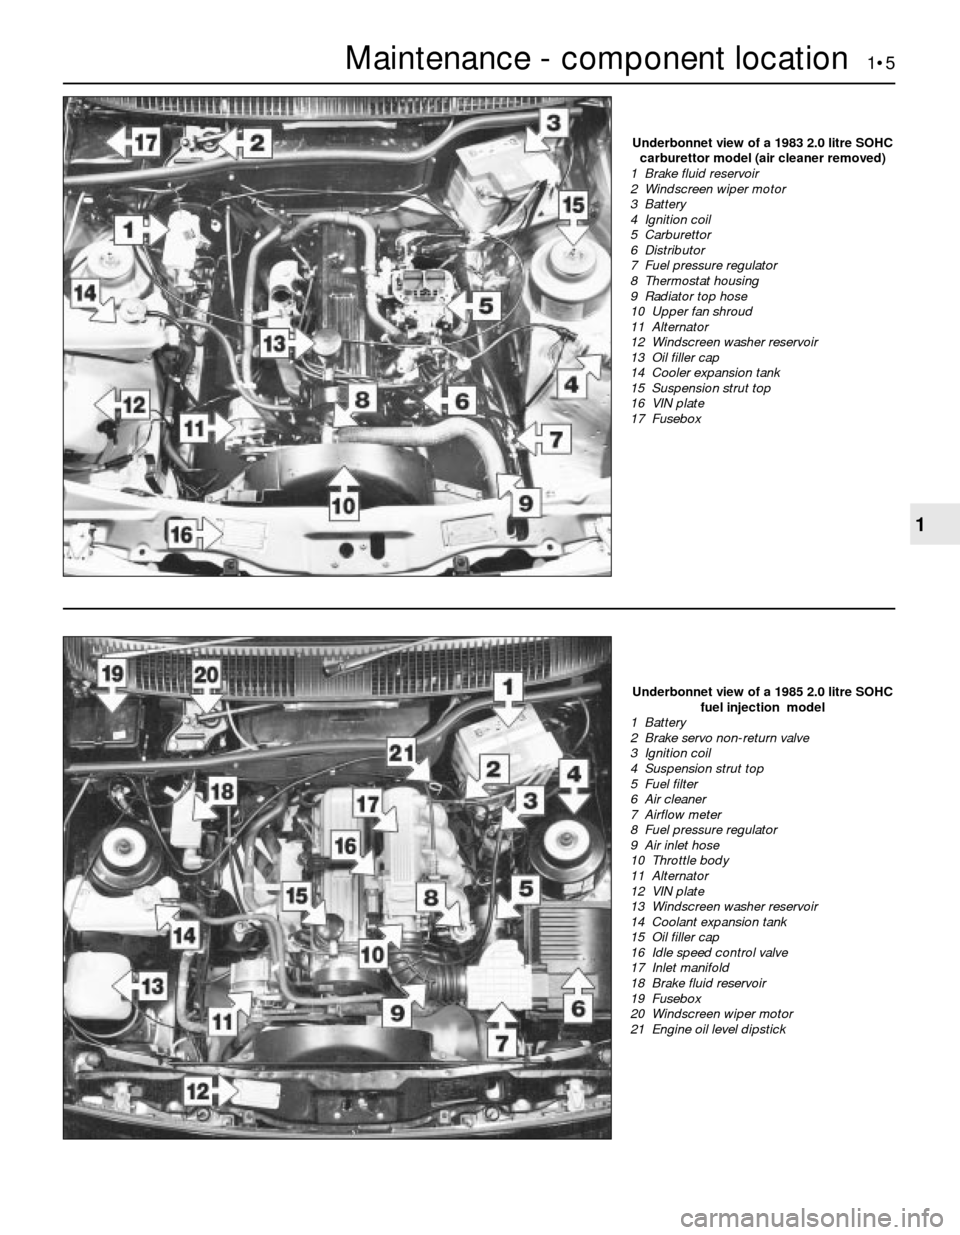 FORD SIERRA 1993 2.G Routine Manintenance And Servicing Workshop Manual Maintenance - component location  1•5
1
Underbonnet view of a 1985 2.0 litre SOHC
fuel injection  model
1  Battery
2  Brake servo non-return valve
3  Ignition coil
4  Suspension strut top
5  Fuel fi